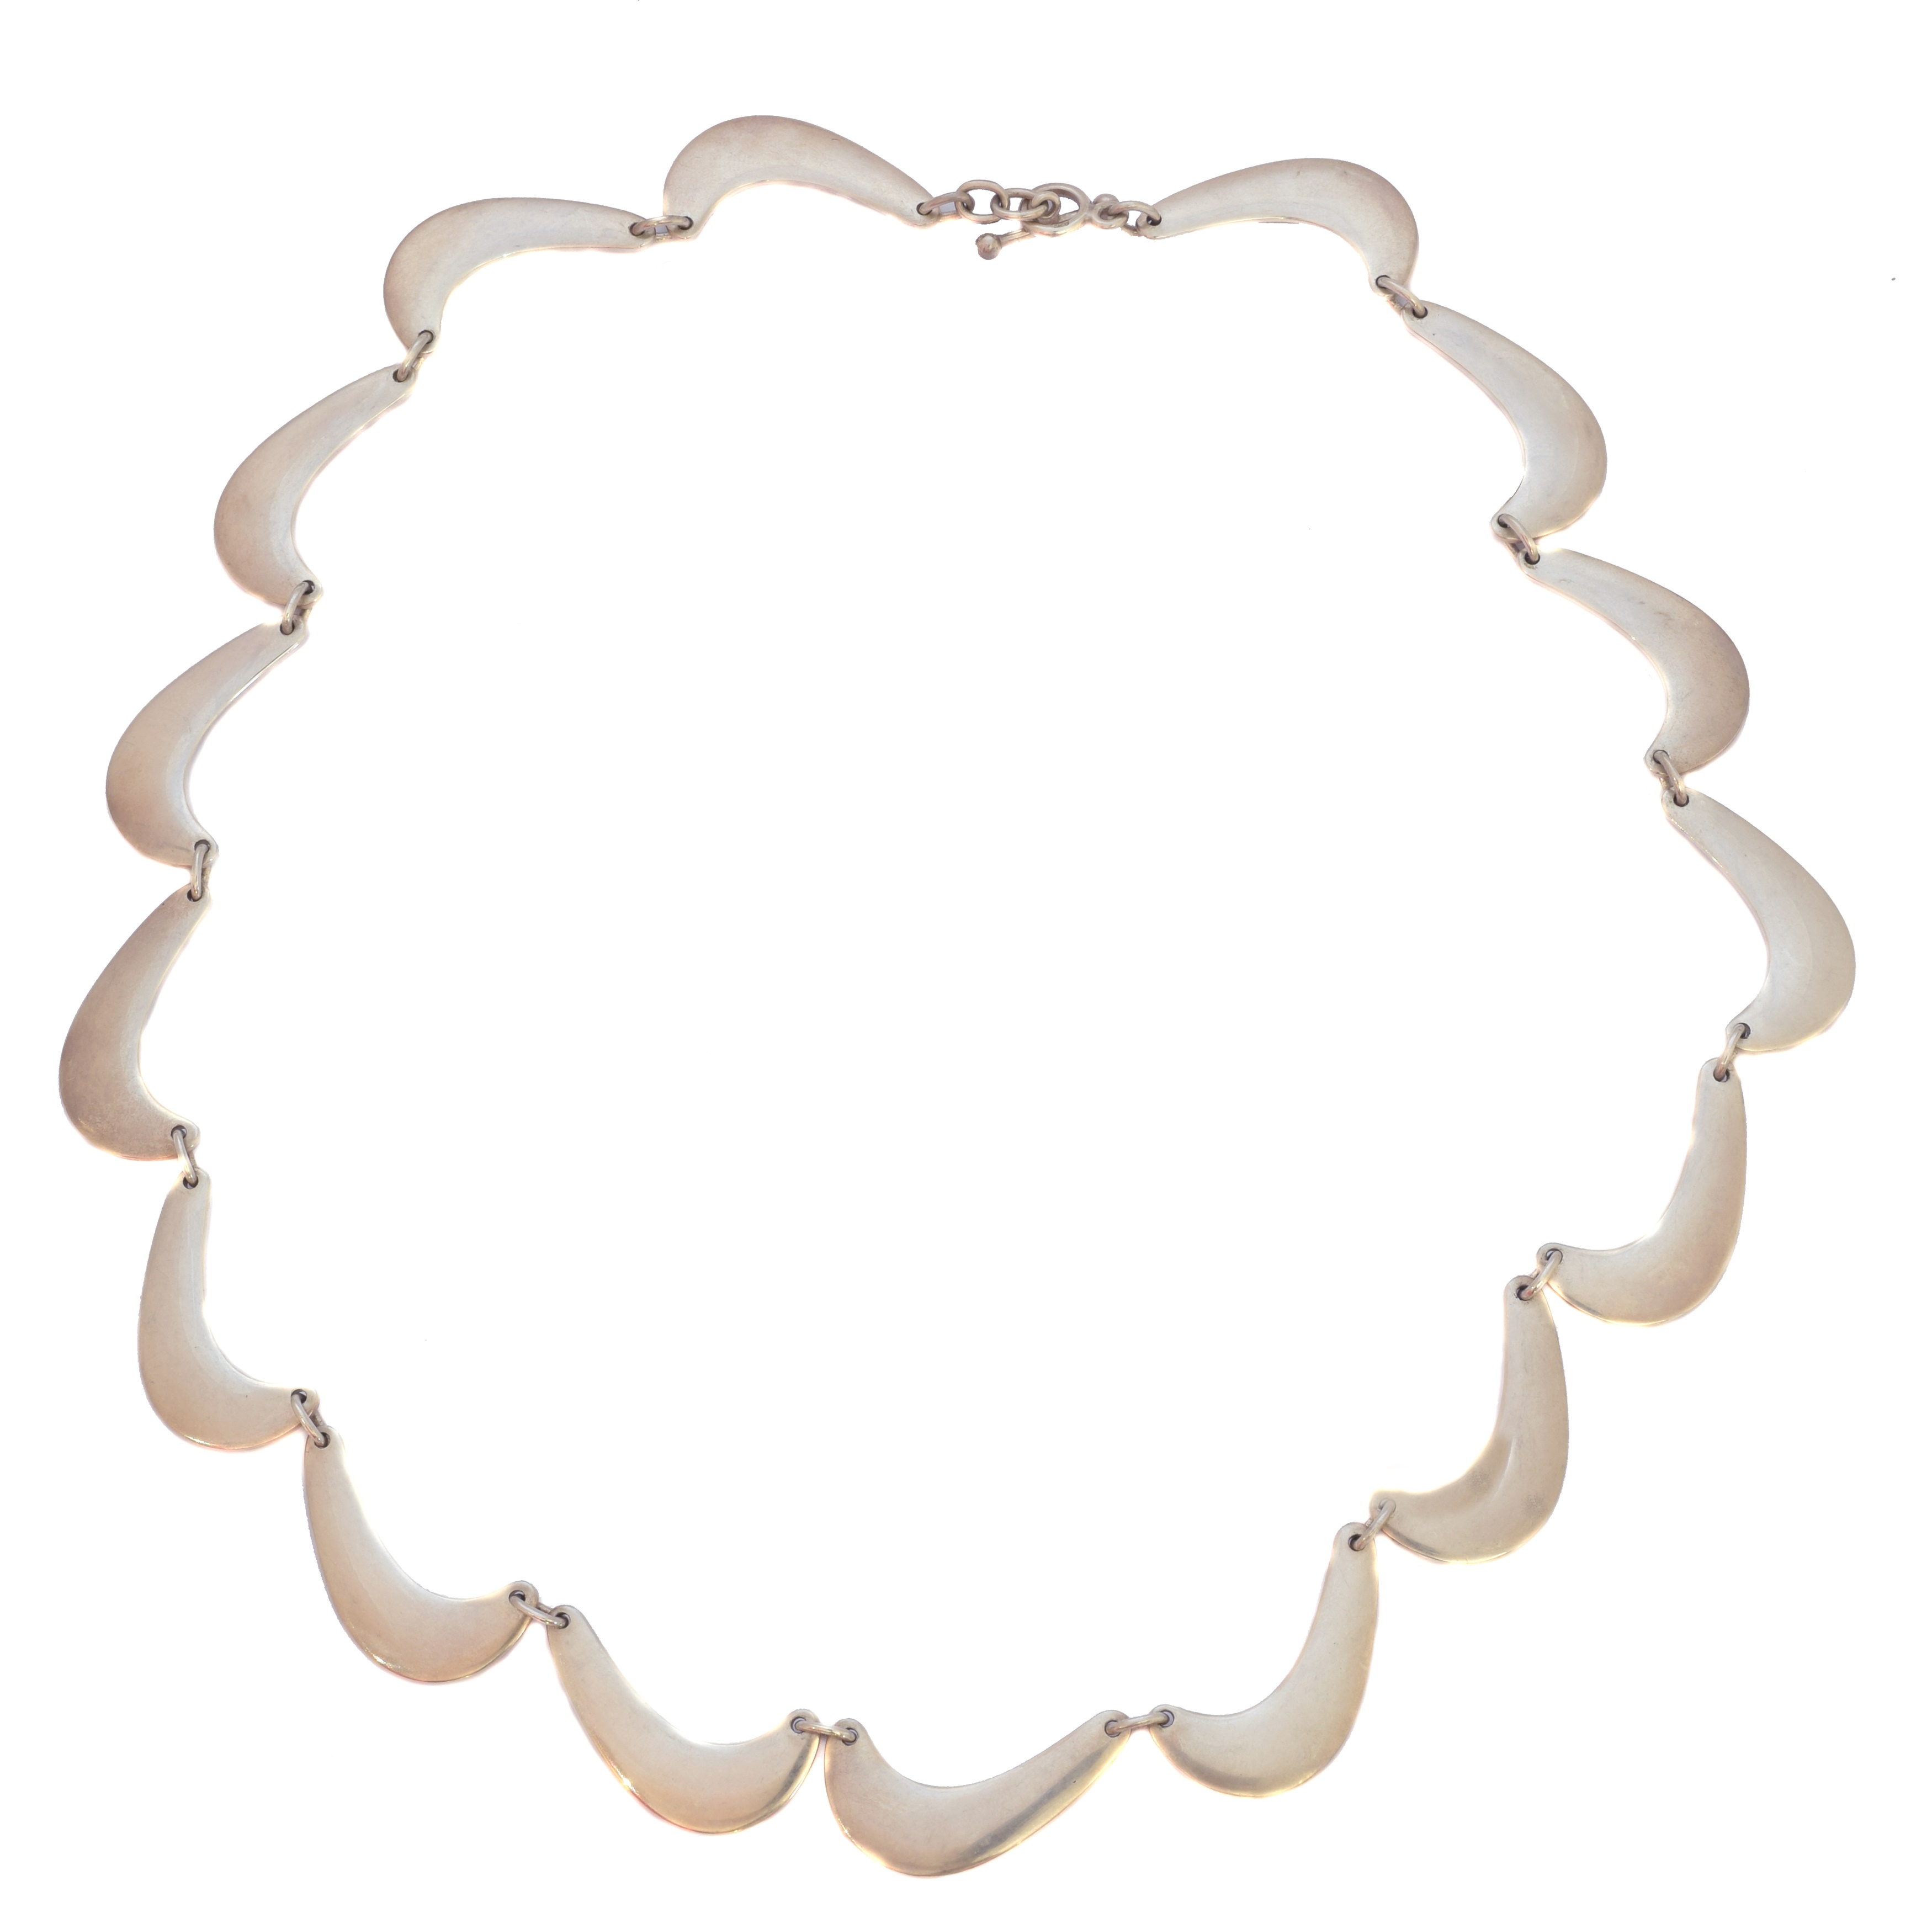 A Georg Jensen 'Boomerang' necklace, no. 276, designed by Nanna Ditzel for Georg Jensen